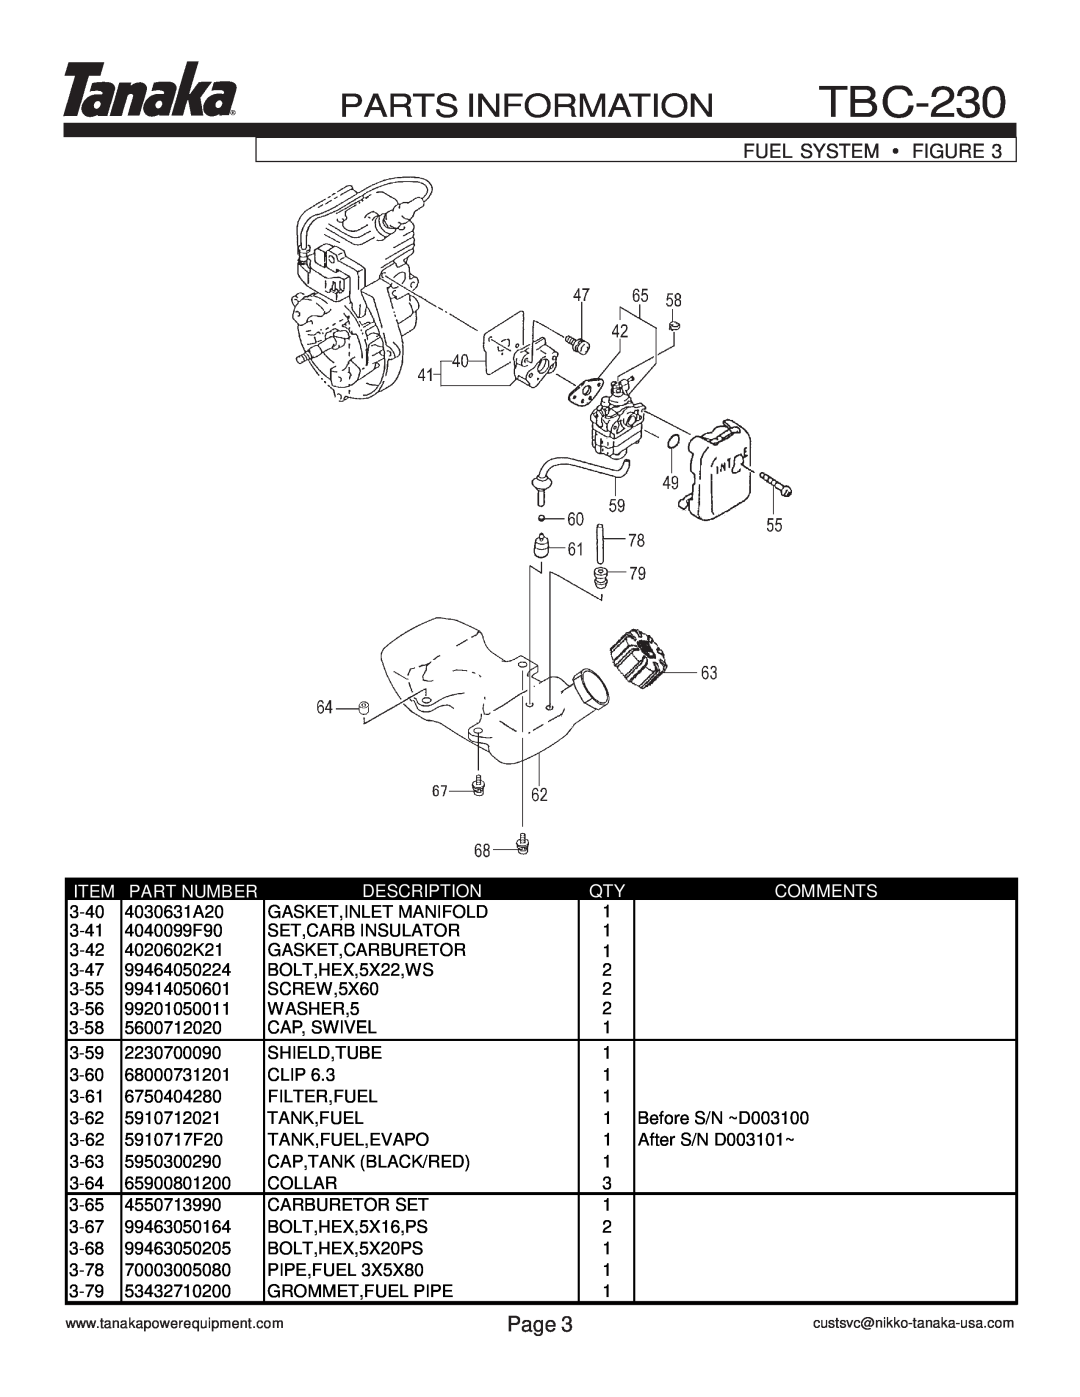 Tanaka TBC-230 manual Parts Information, Fuel System Figure, Page, Part Number, Description, Comments 